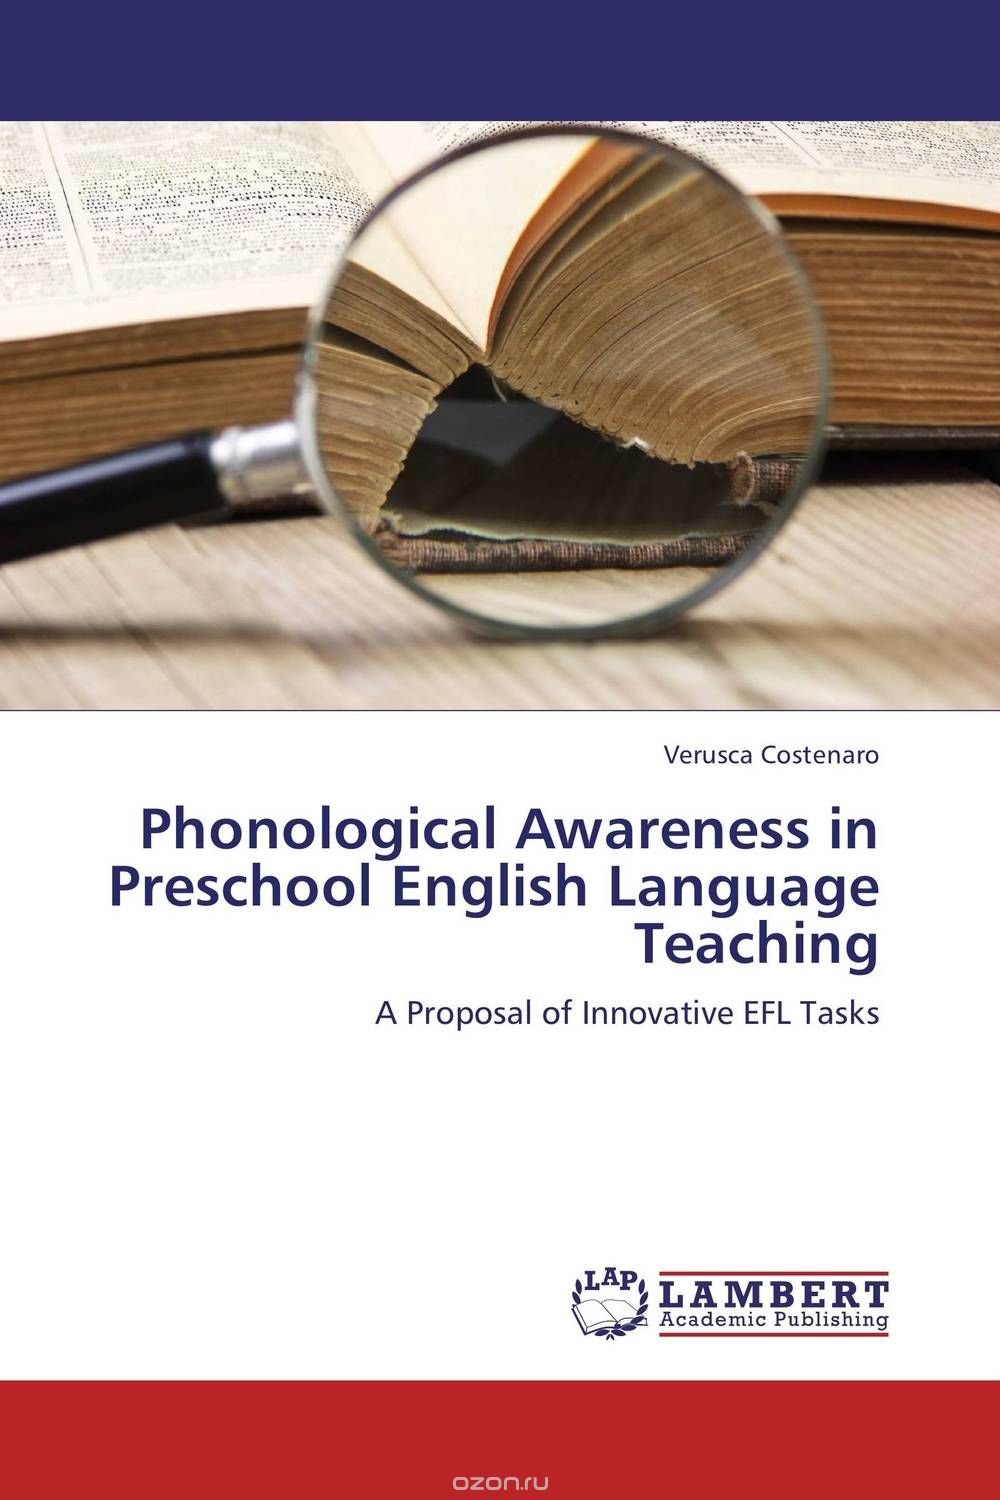 Скачать книгу "Phonological Awareness in Preschool English Language Teaching"